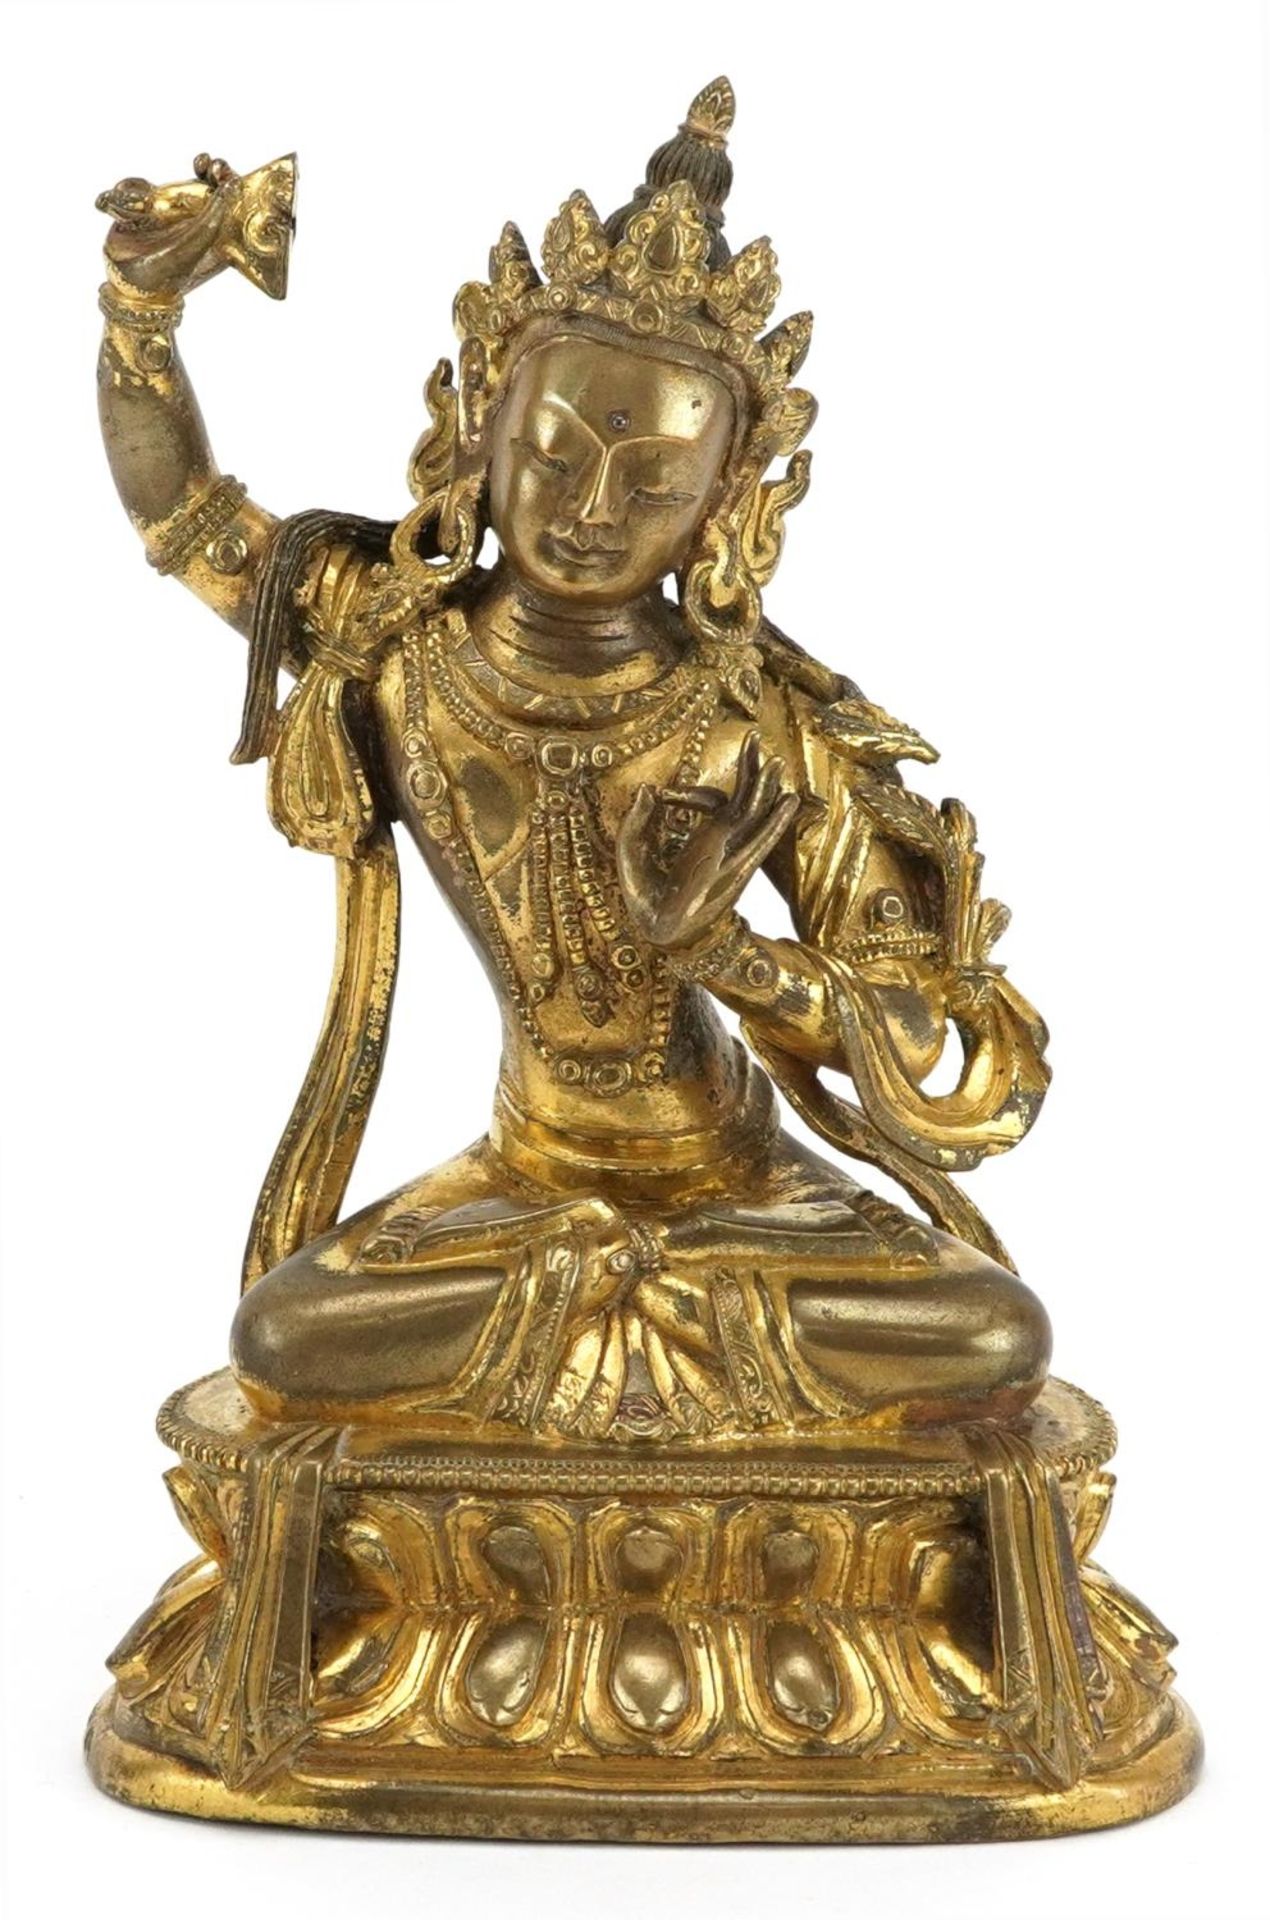 Antique Chino Tibetan gilt bronze figure of Vajrasattva Buddha, 17cm high : For further